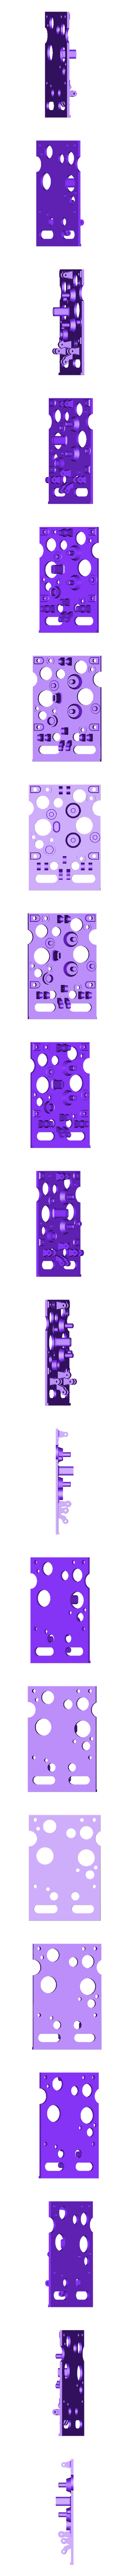 base.stl Download STL file 7-Segments • 3D printing design, fhuable